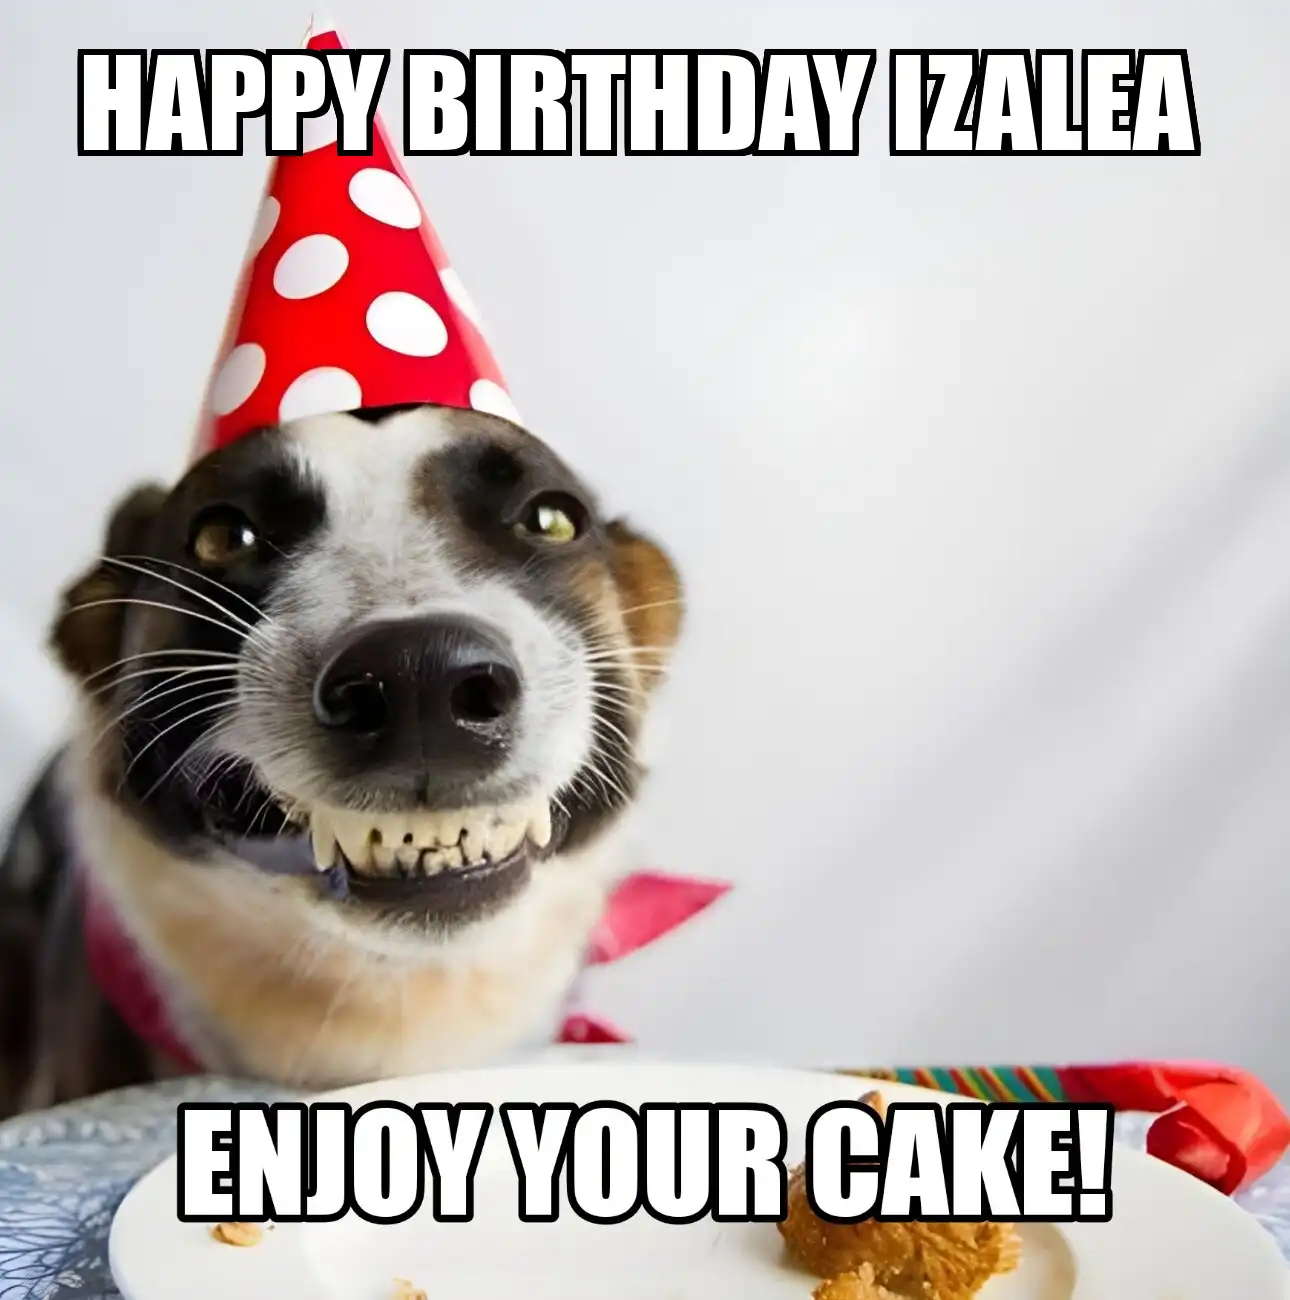 Happy Birthday Izalea Enjoy Your Cake Dog Meme